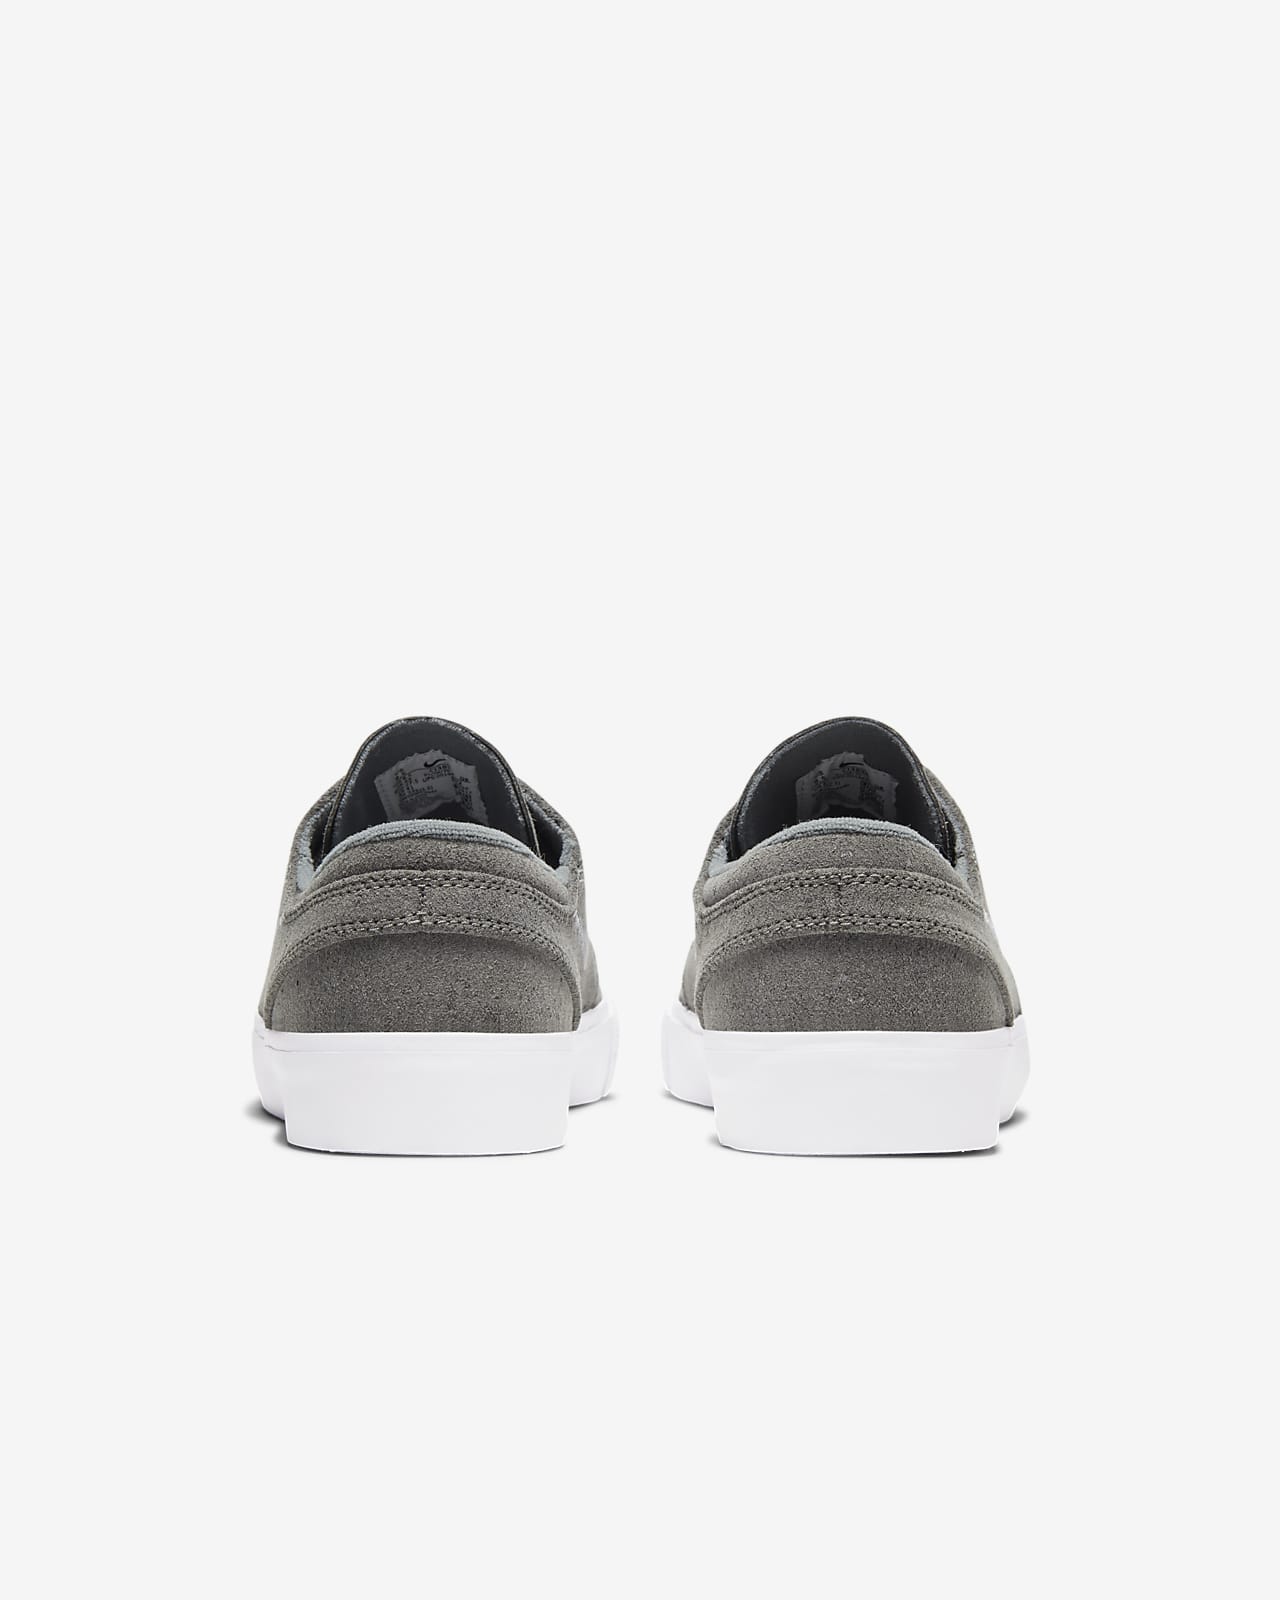 stefan janoski shoes grey